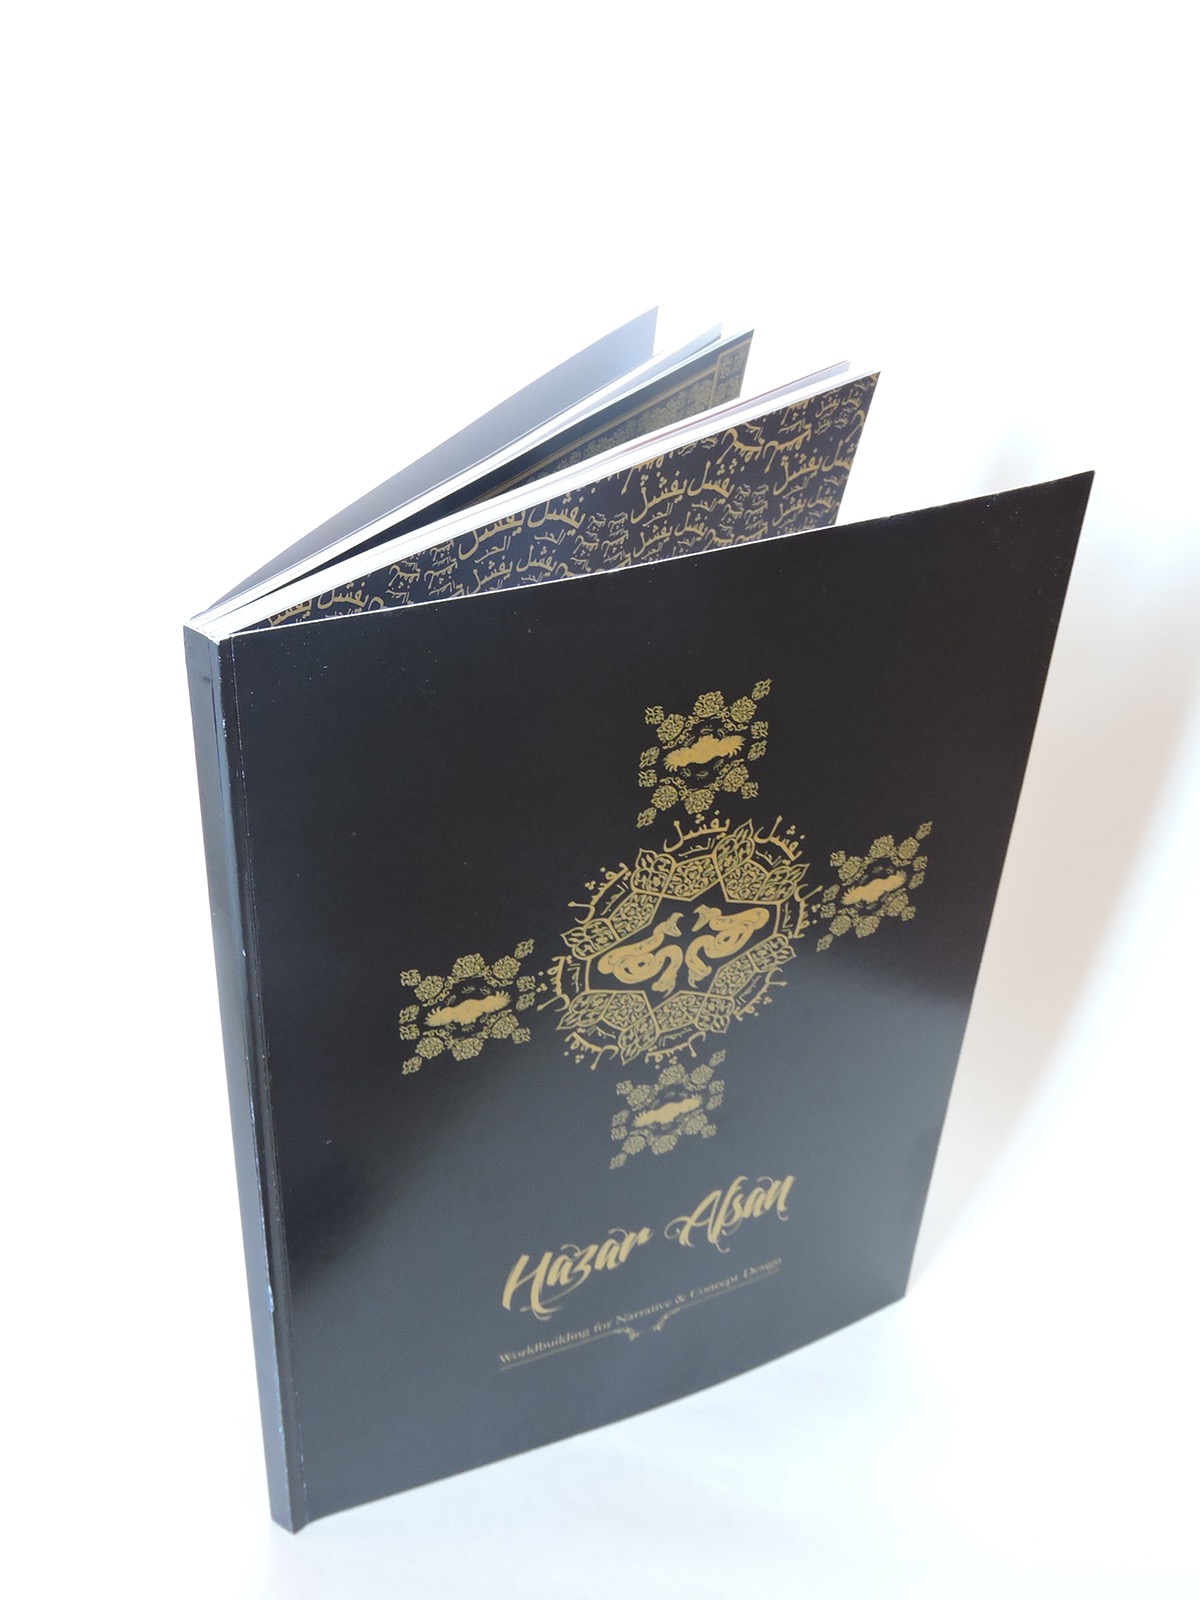 patternwork pattern middle eastern arabic sigil book Icon chapter dividers gold ink overprint metallic